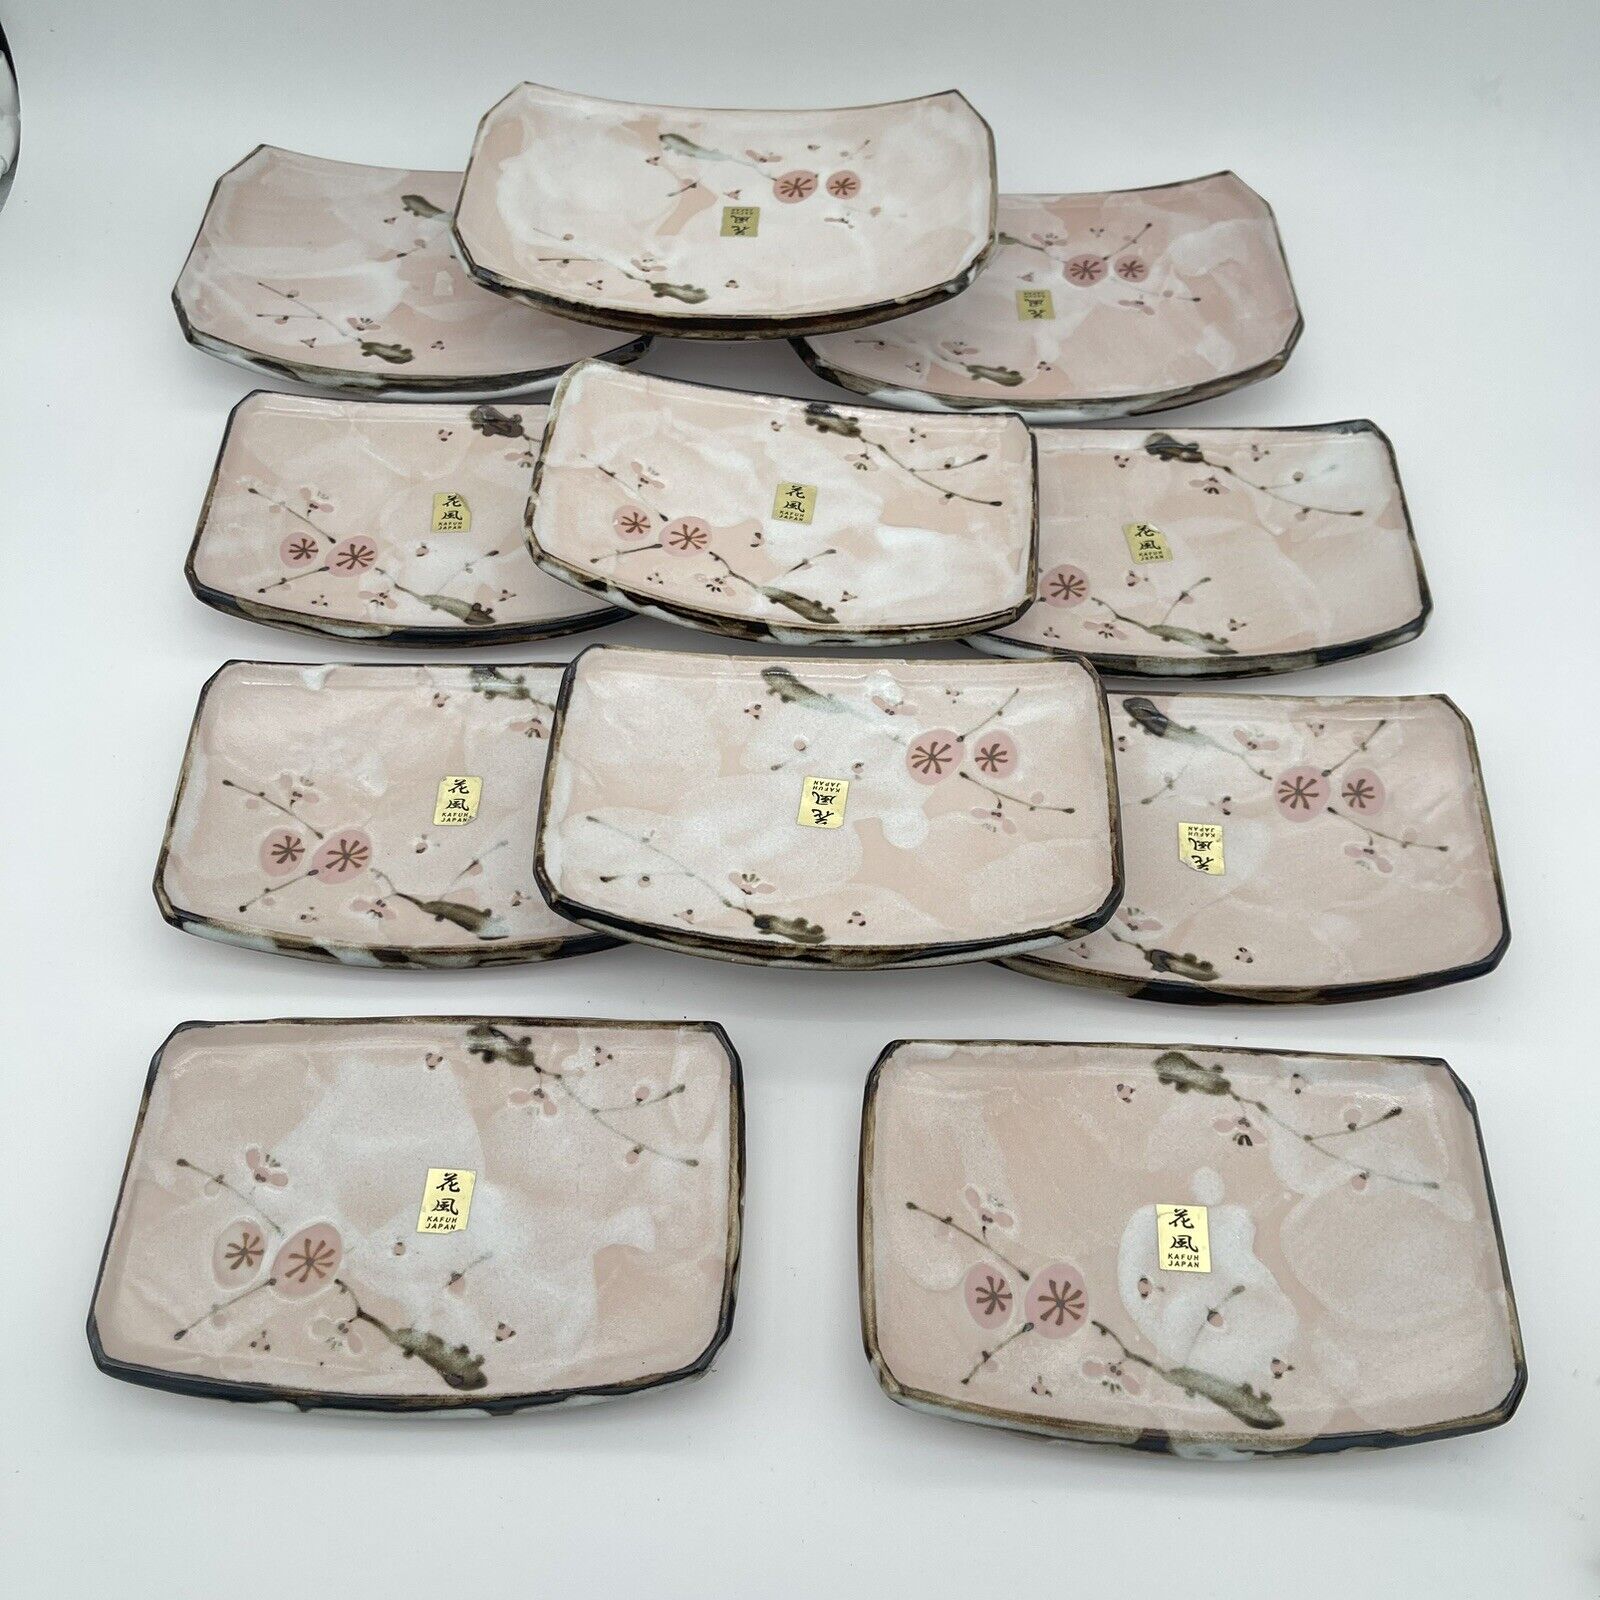 11 New Japanese Kafuh Sousaku Sushi Plates in a Pink Cherry Blossom Pattern Rare